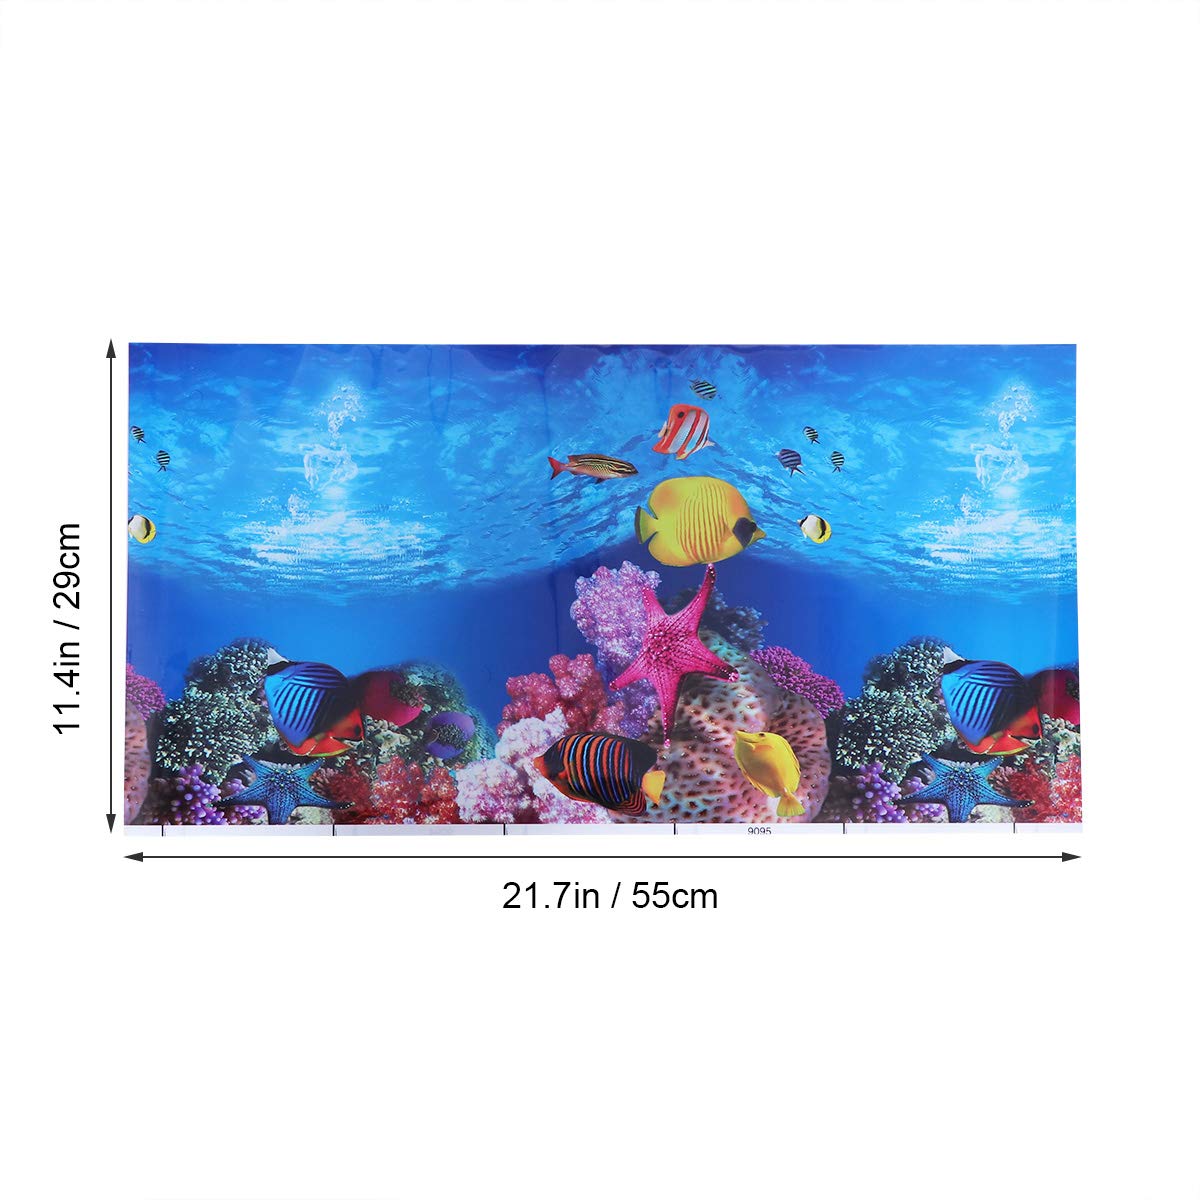 Aquarium Sticker Achterwand - 1200x1200 Wallpaper - teahub.io